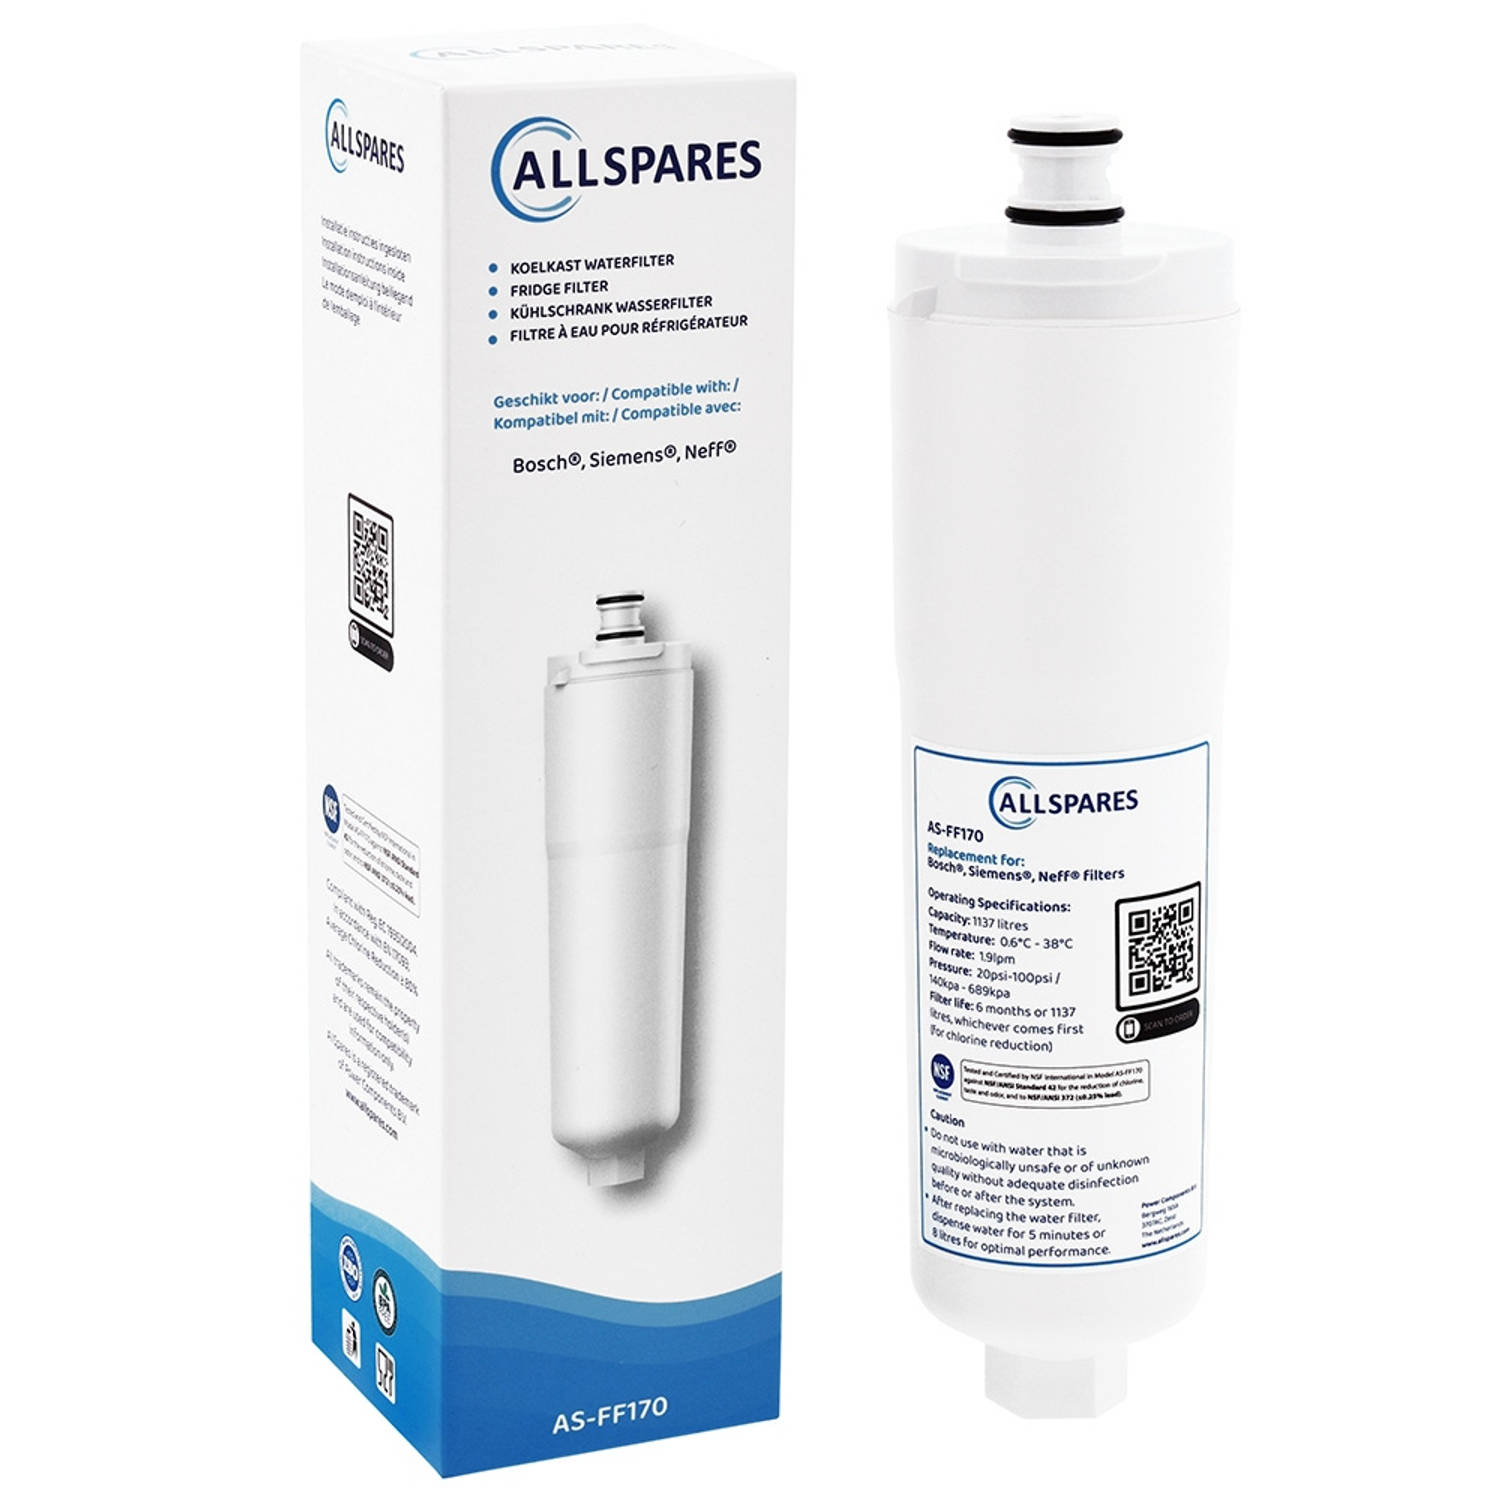 AllSpares Bosch-Siemens Waterfilter Koelkast CS-52